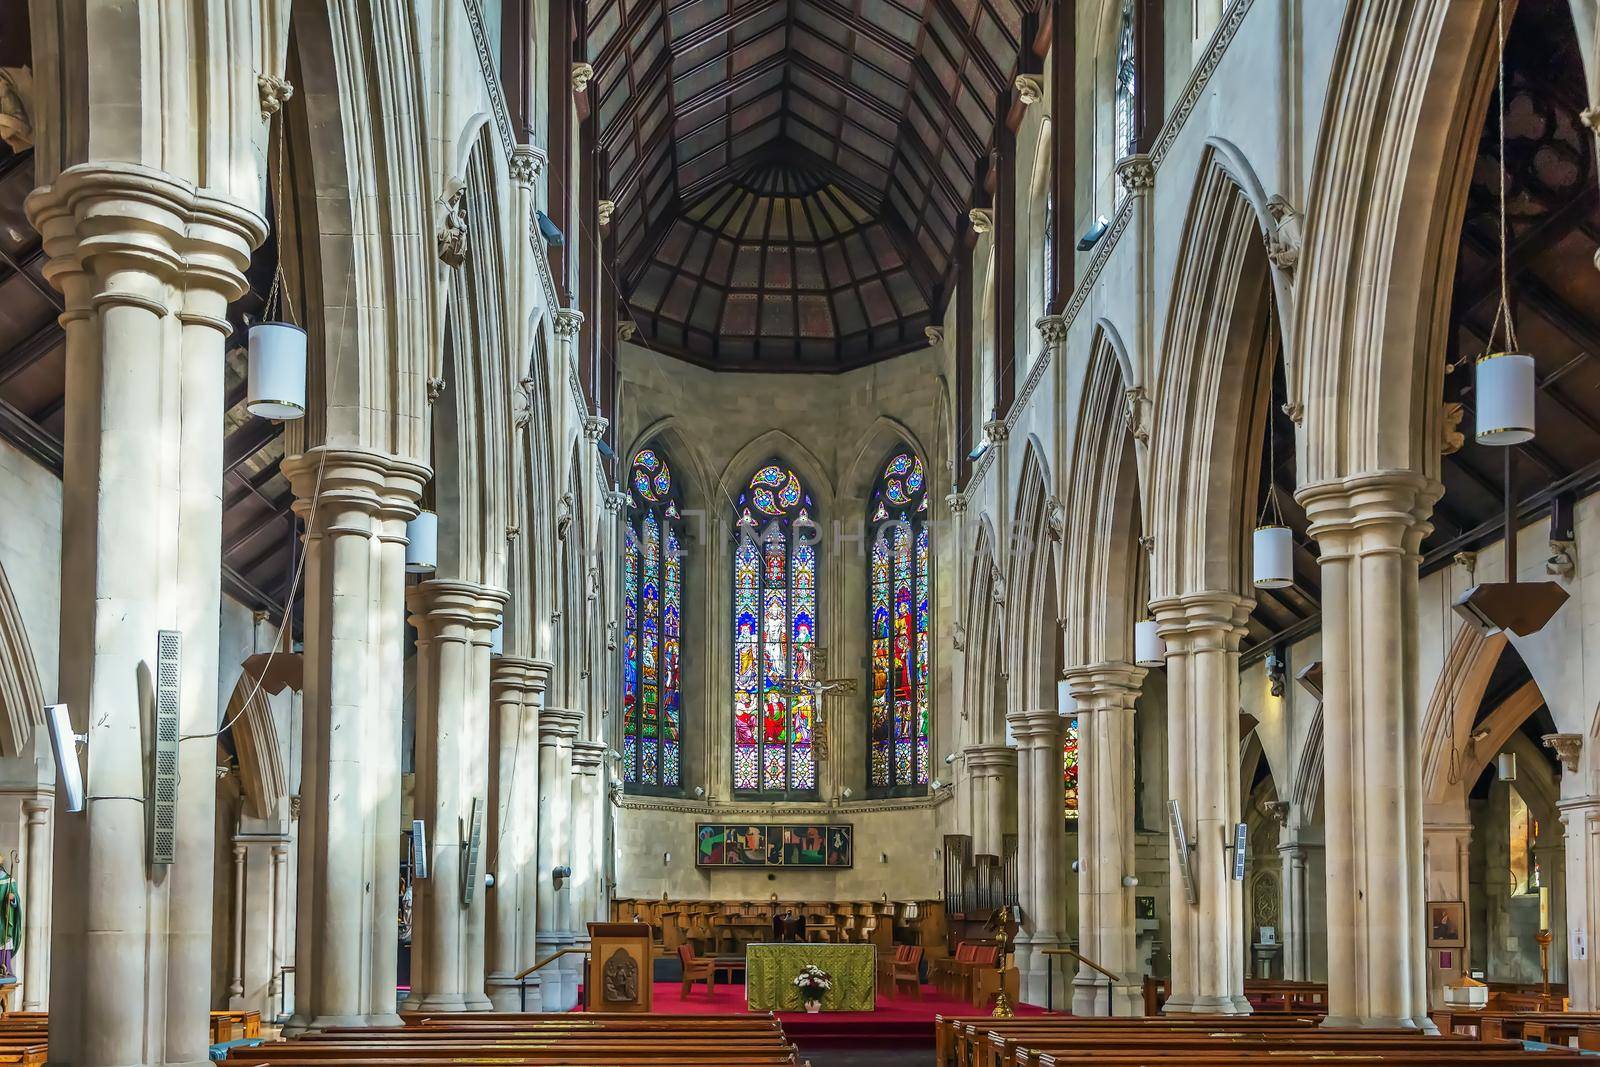 Catholic Saint Saviour's Church in Dublin, Ireland. Interior